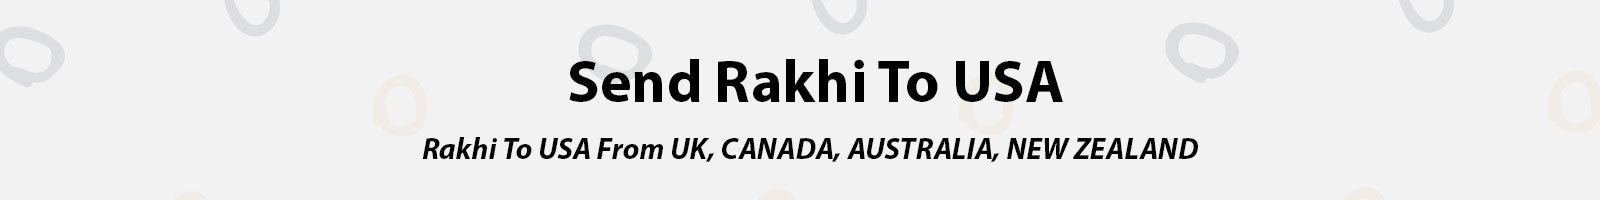 Send Rakhi To USA from India, Australia, UK, Canada, And New Zealand